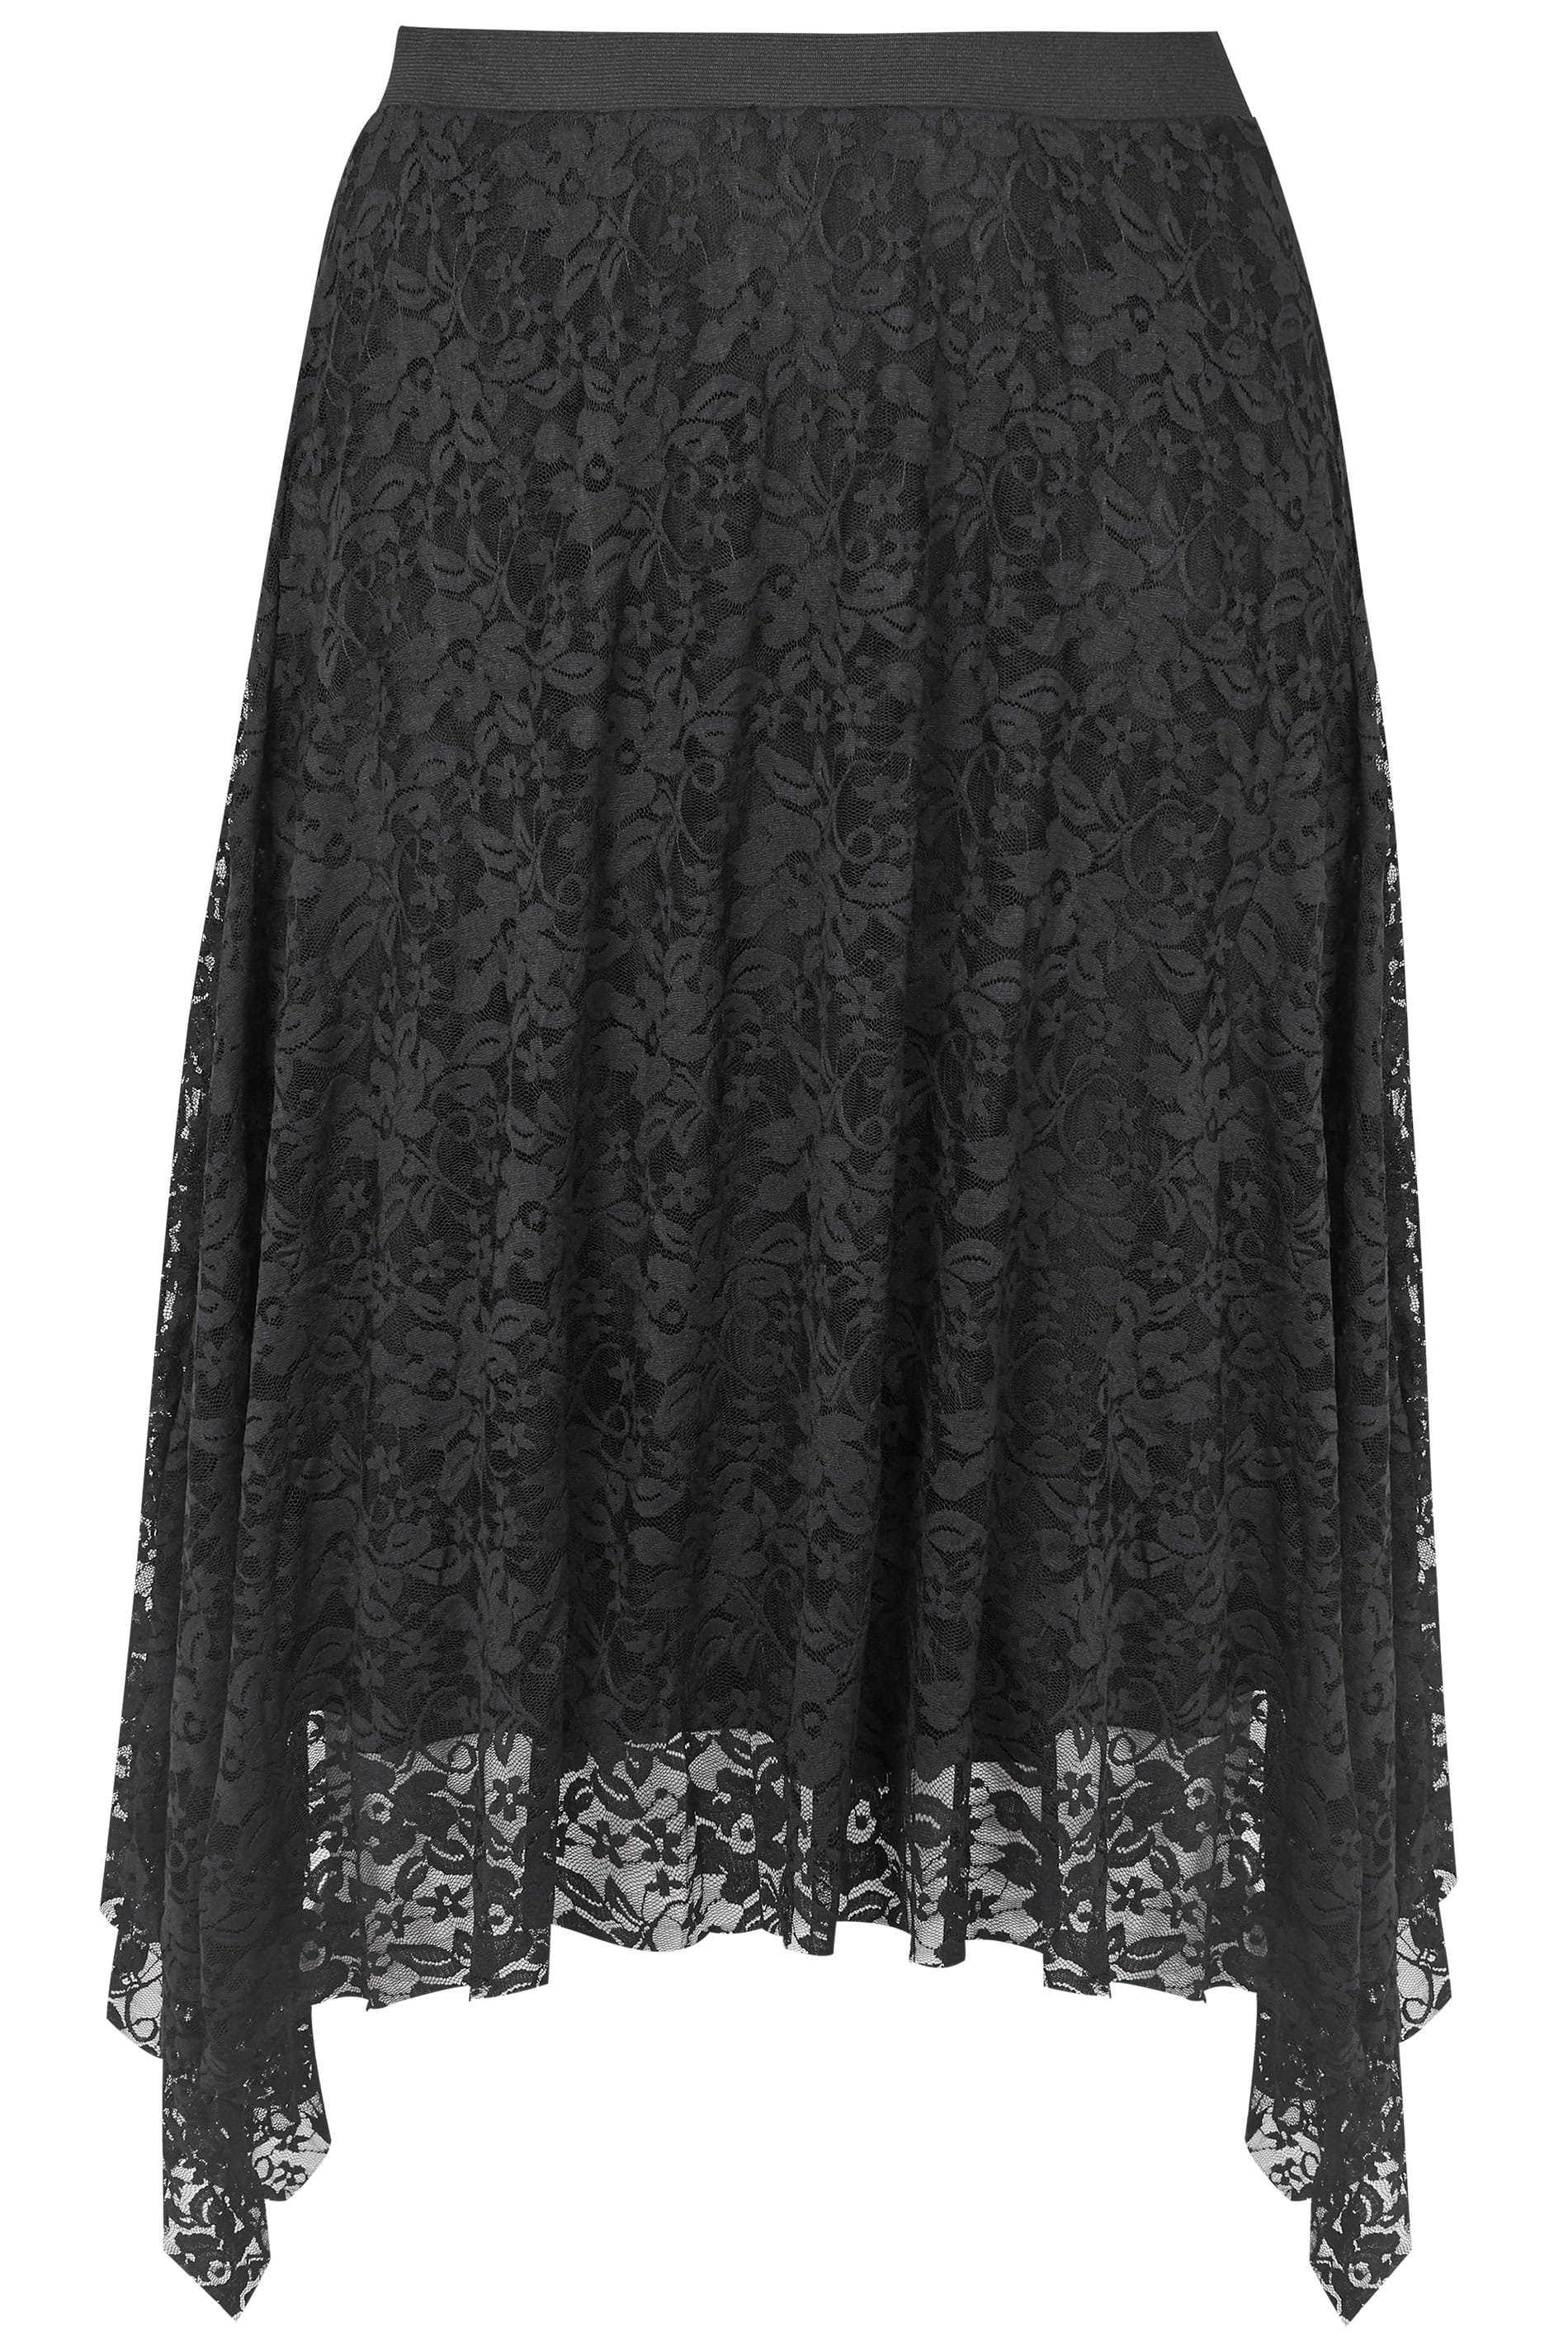 Black Lace Hanky Hem Skirt, Plus size 16 to 32